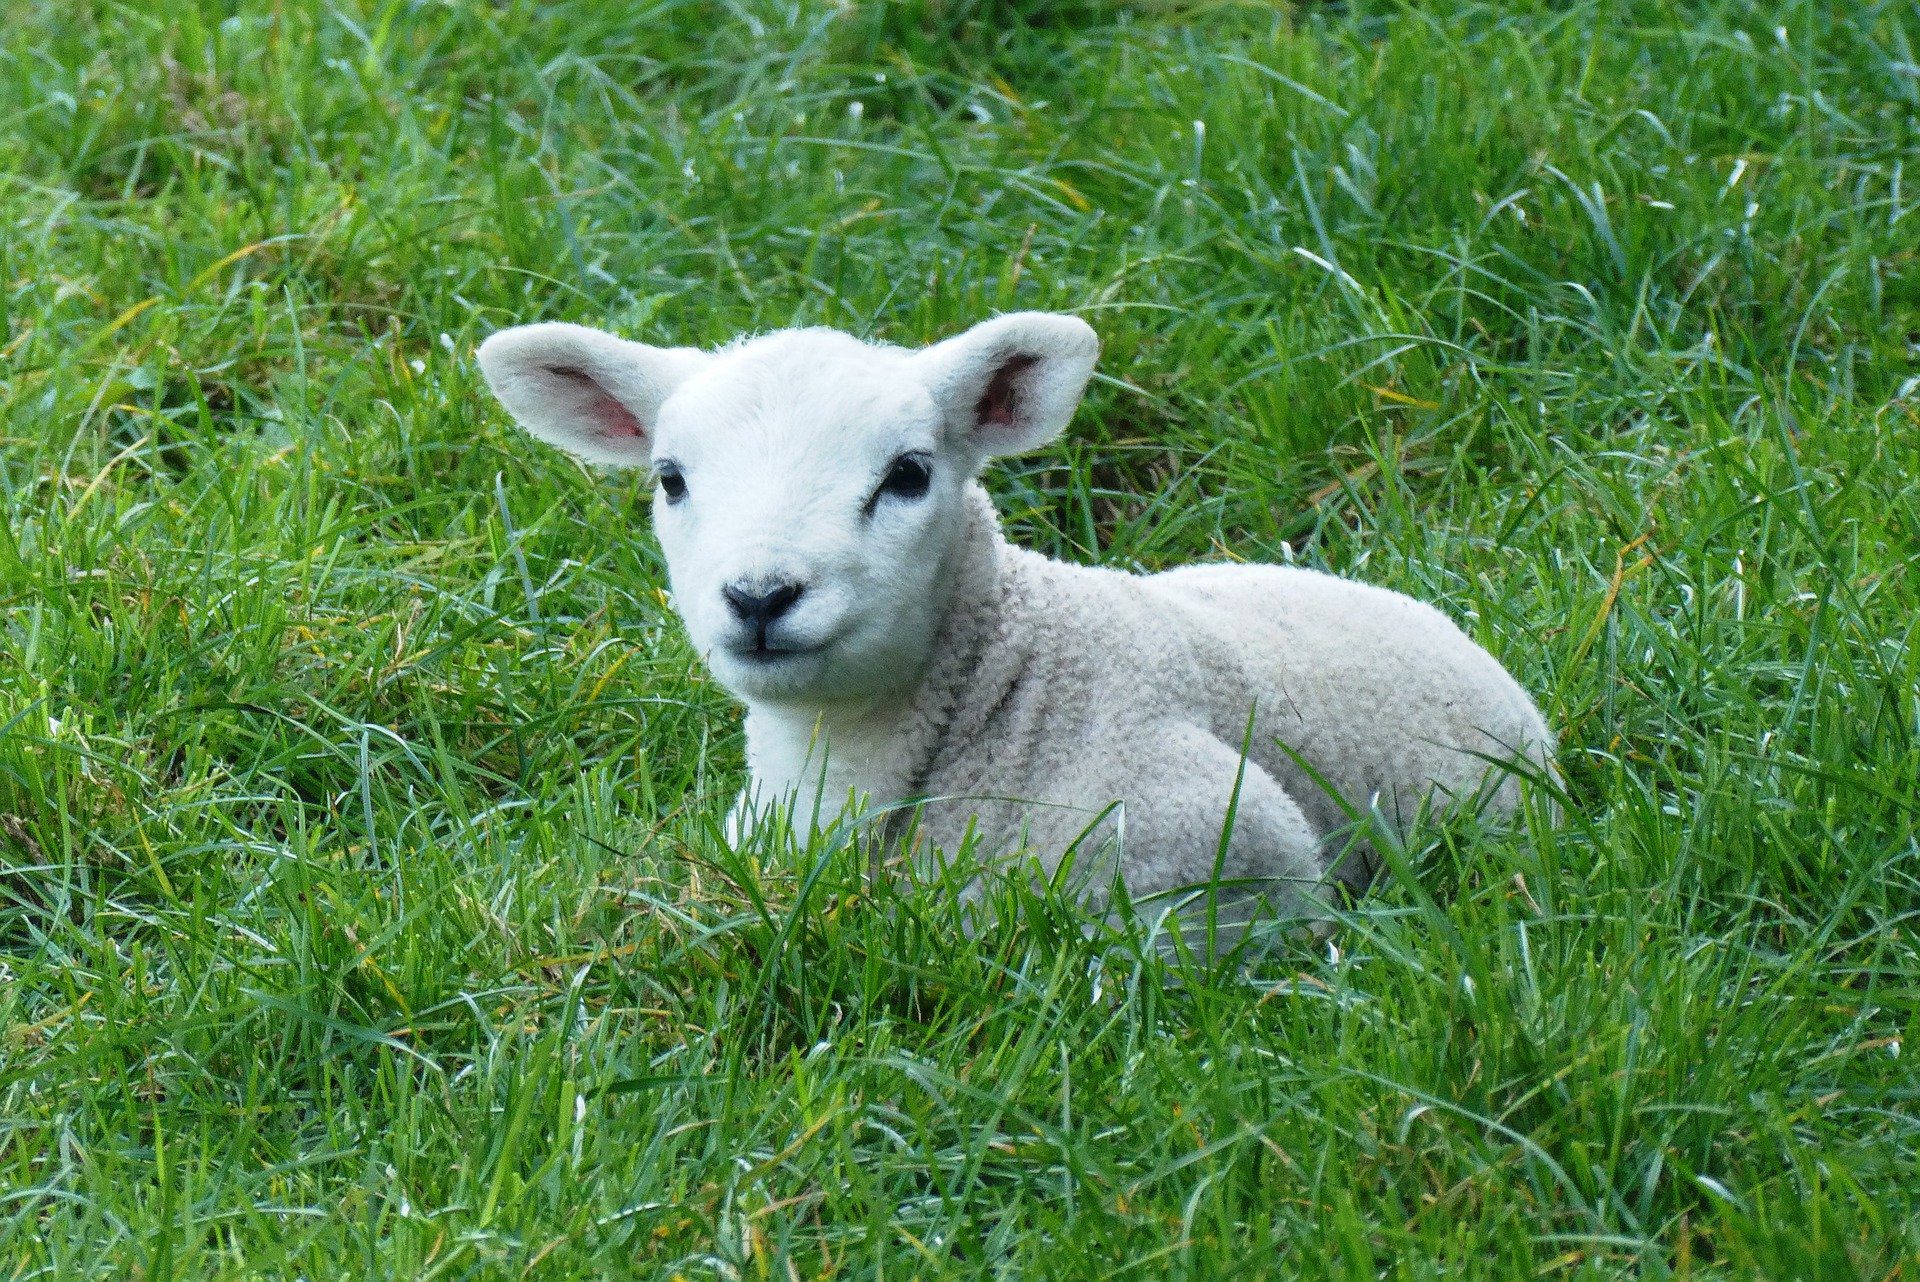 Managing The Newborn Lamb